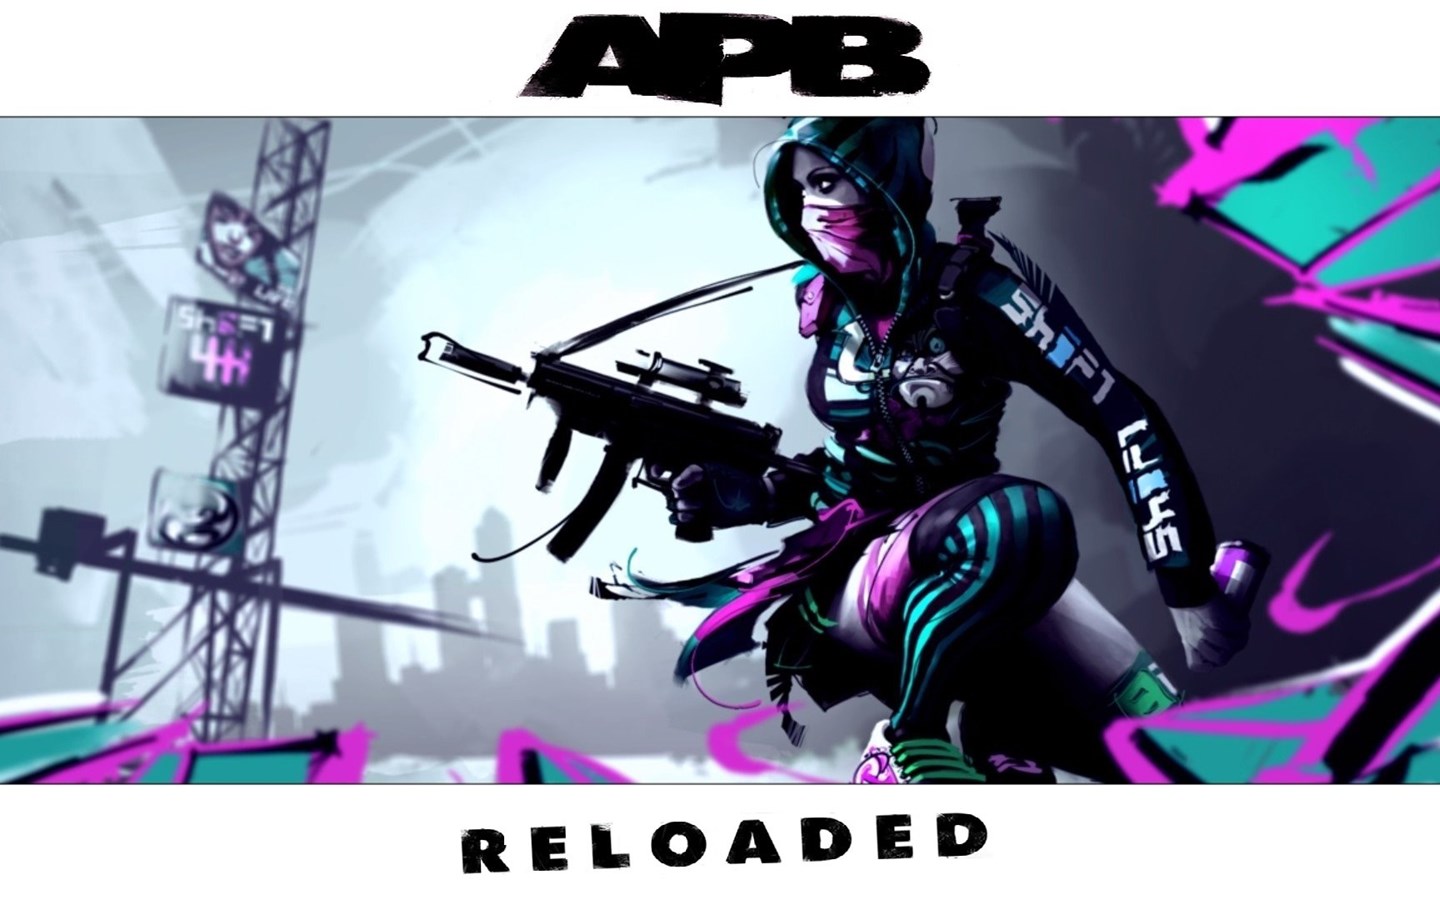 Apb reloaded есть в steam фото 8